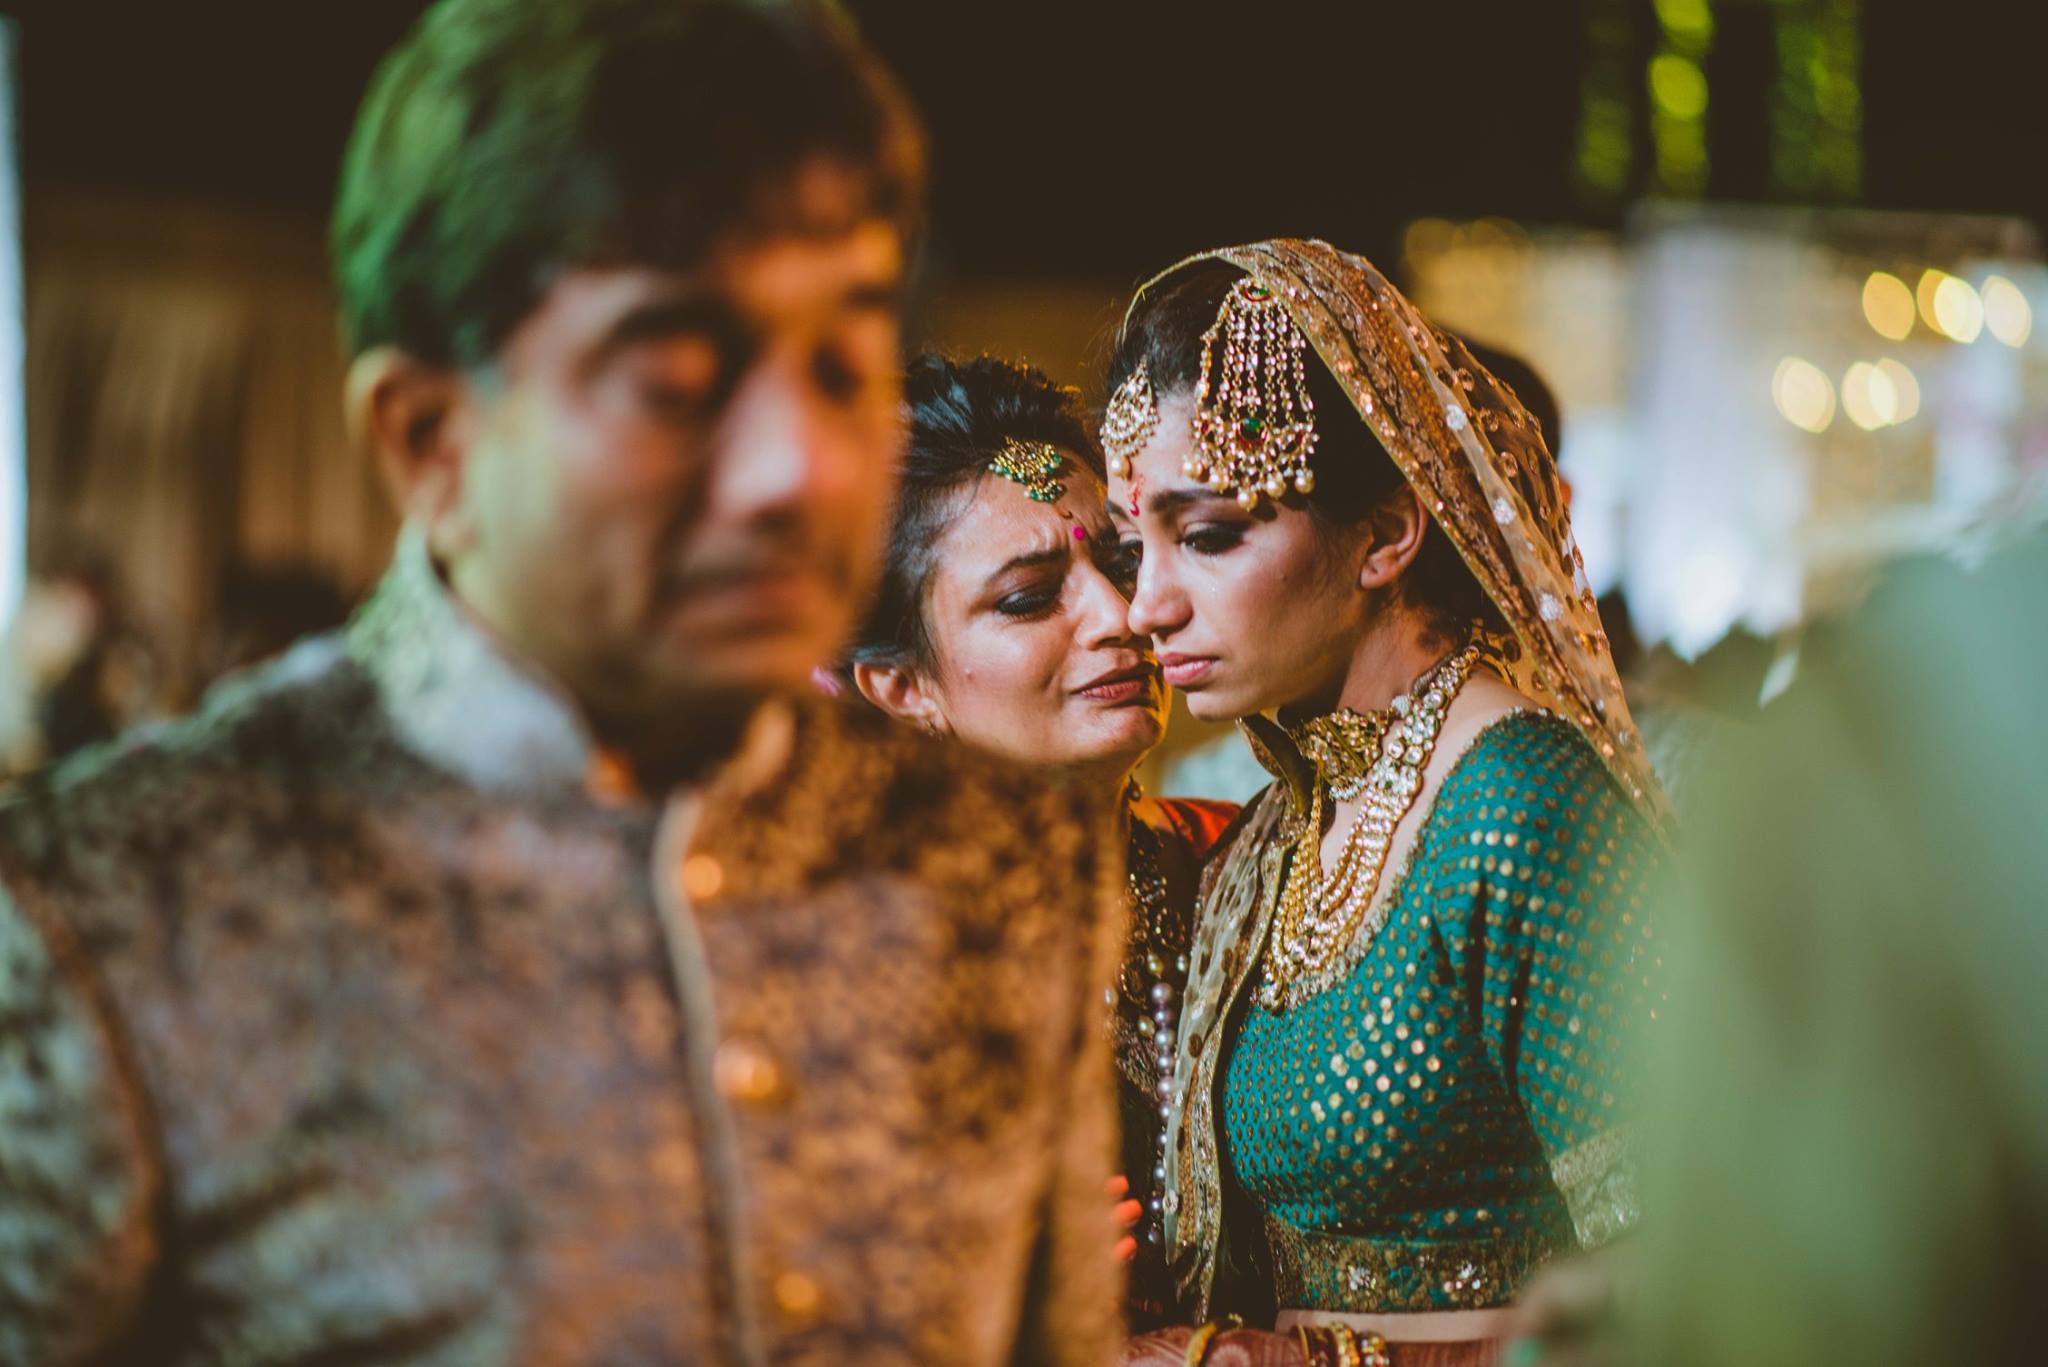 Lights and Stories Wedding Photographer, Mumbai